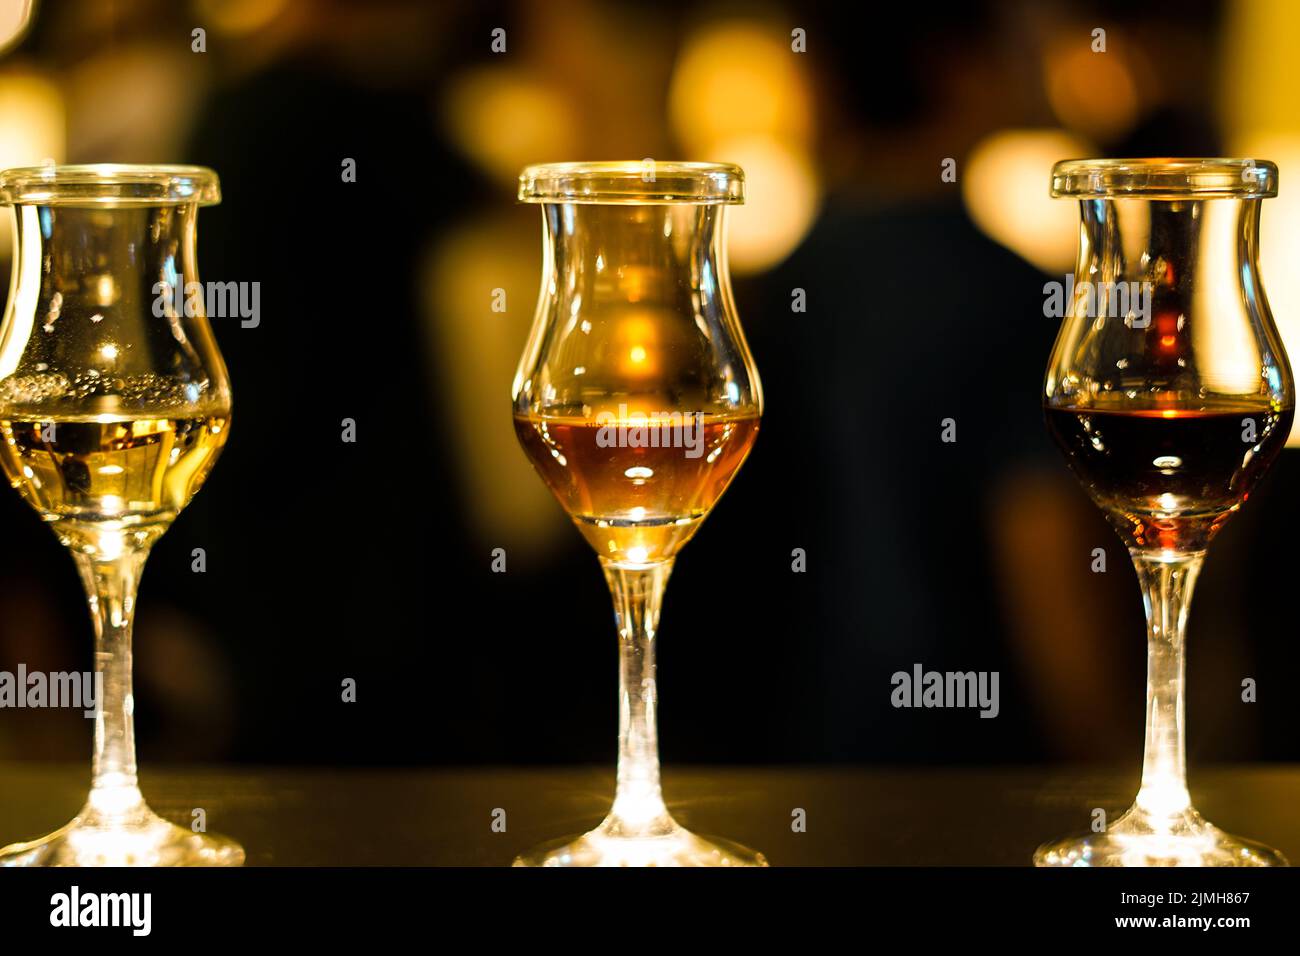 Stylish wine glass image of Stock Photo